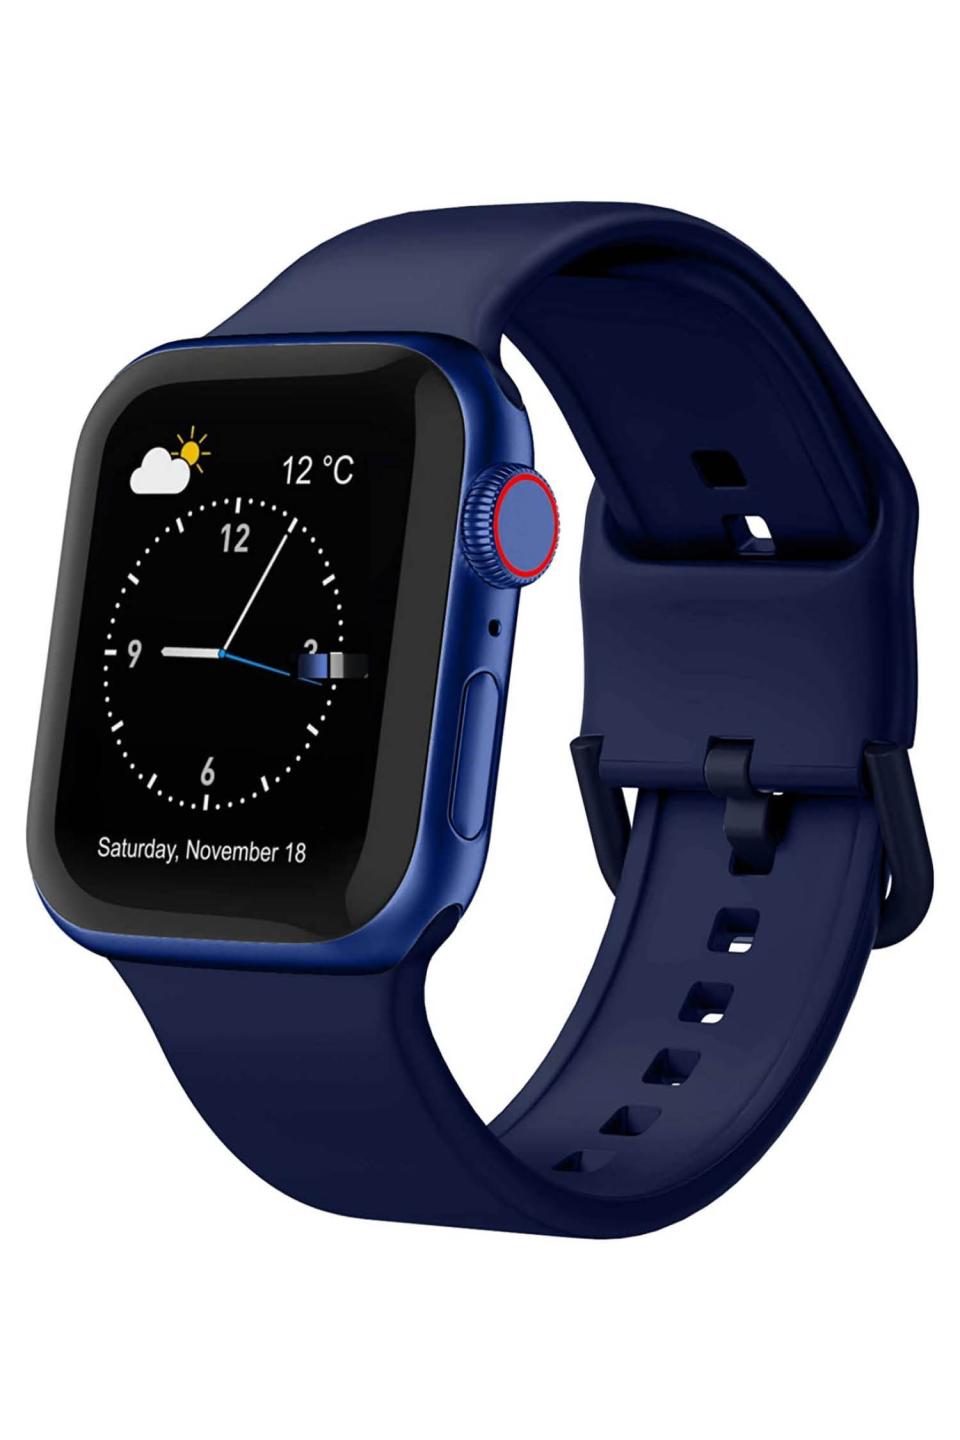 2) Apple Watch Band